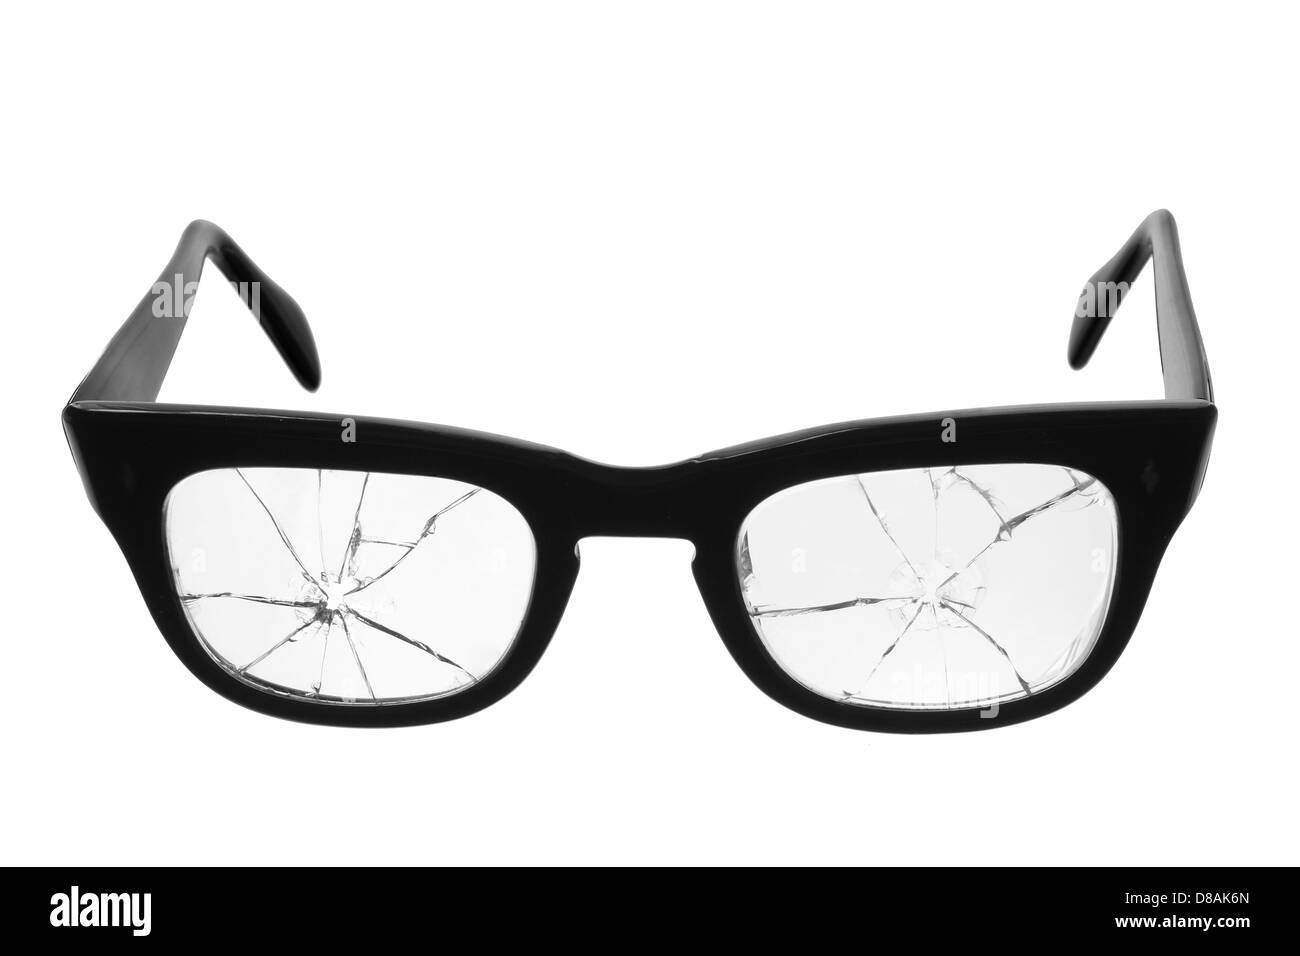 Eyeglasses with Broken Lens Stock Photo